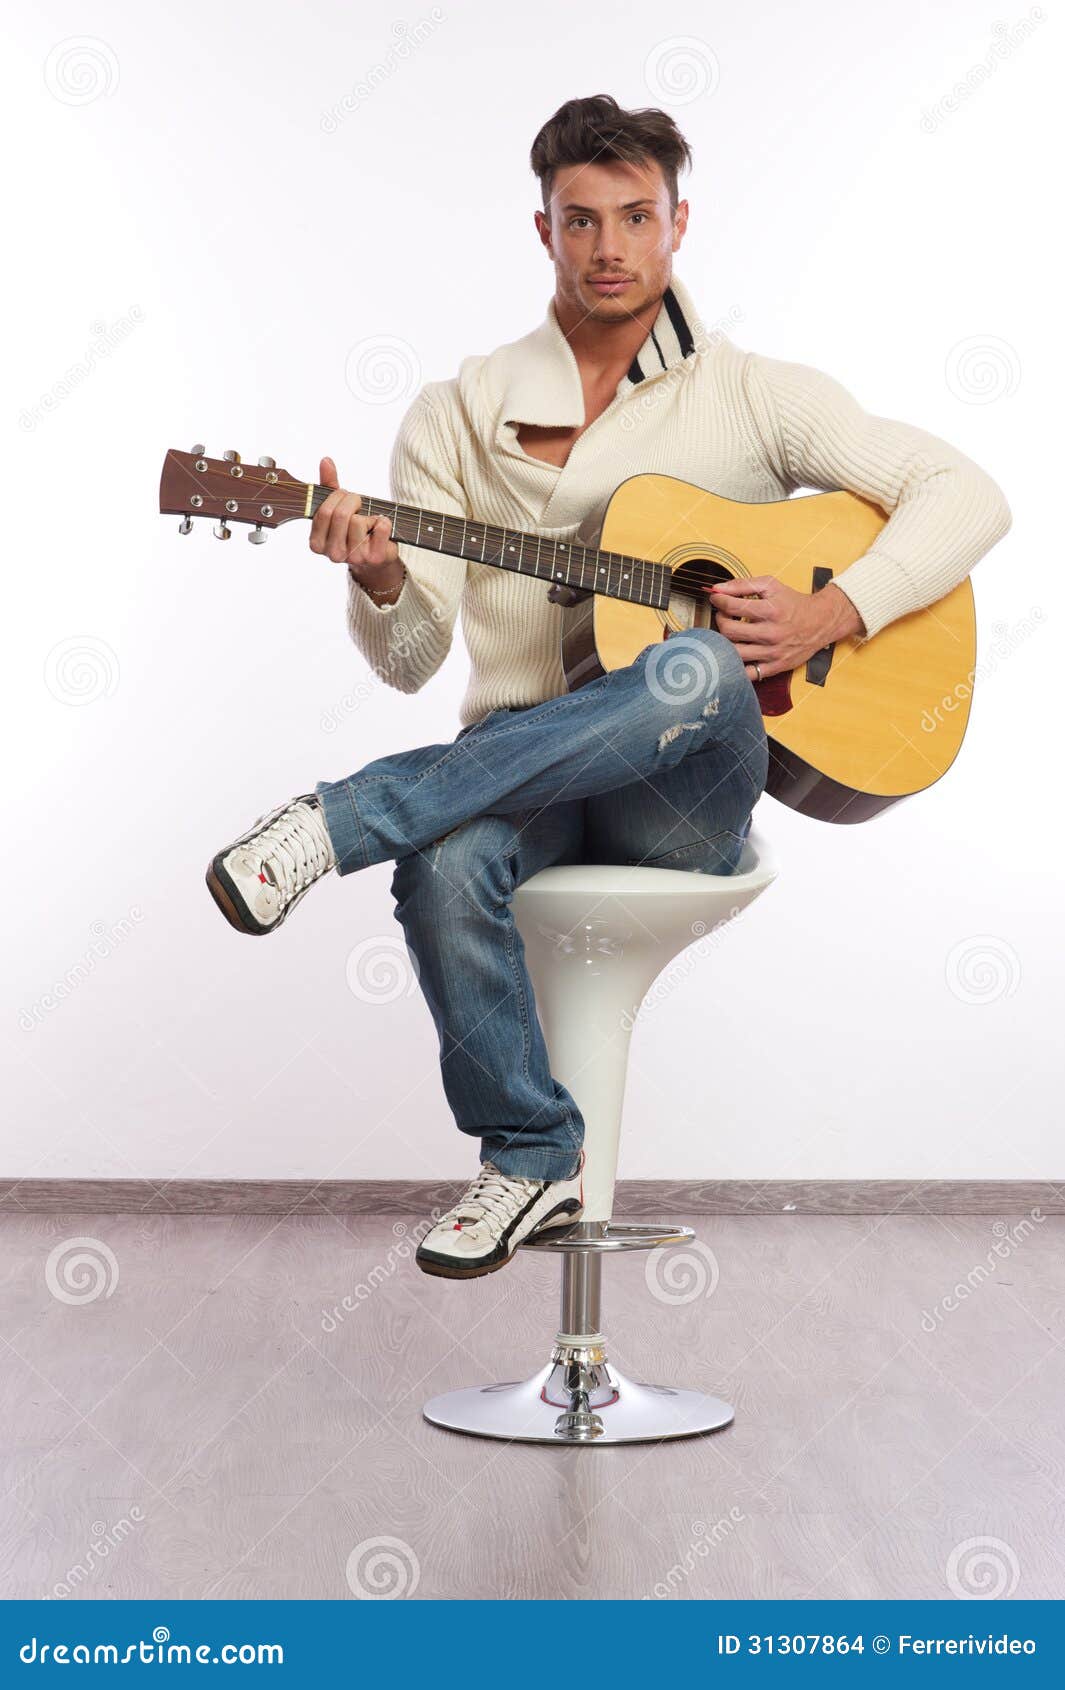 lefty guitar player